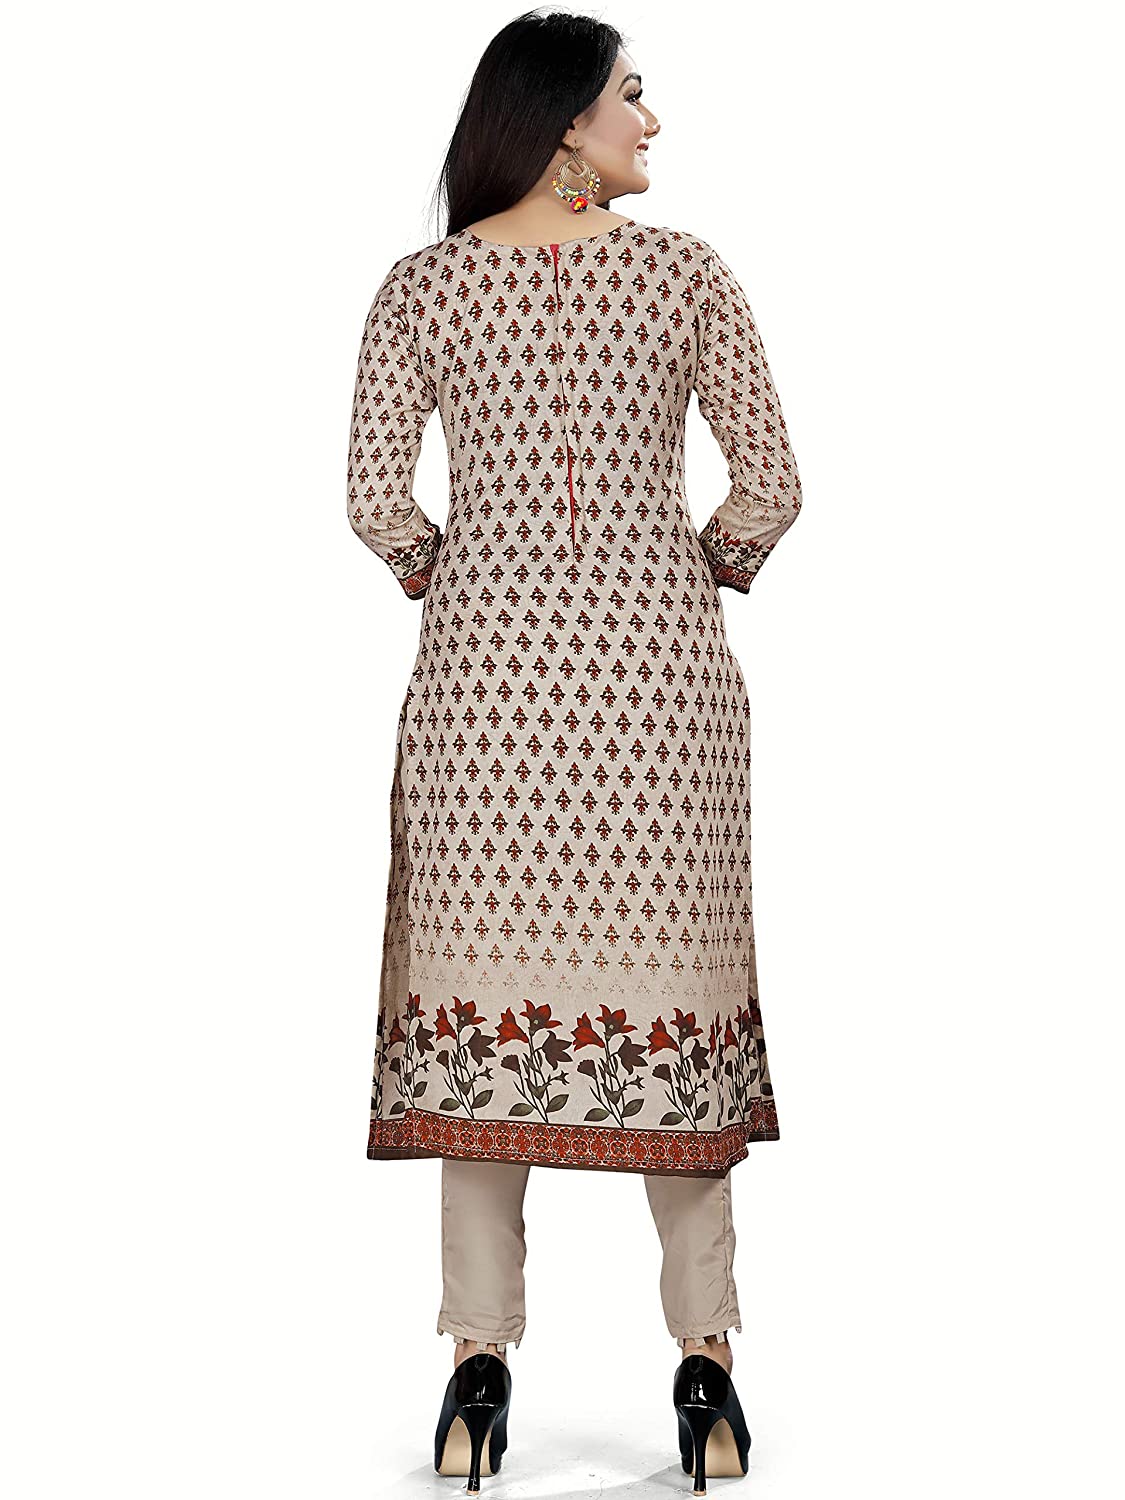 Women's Beige Cotton Printed Unstitched Salwar Suit Material